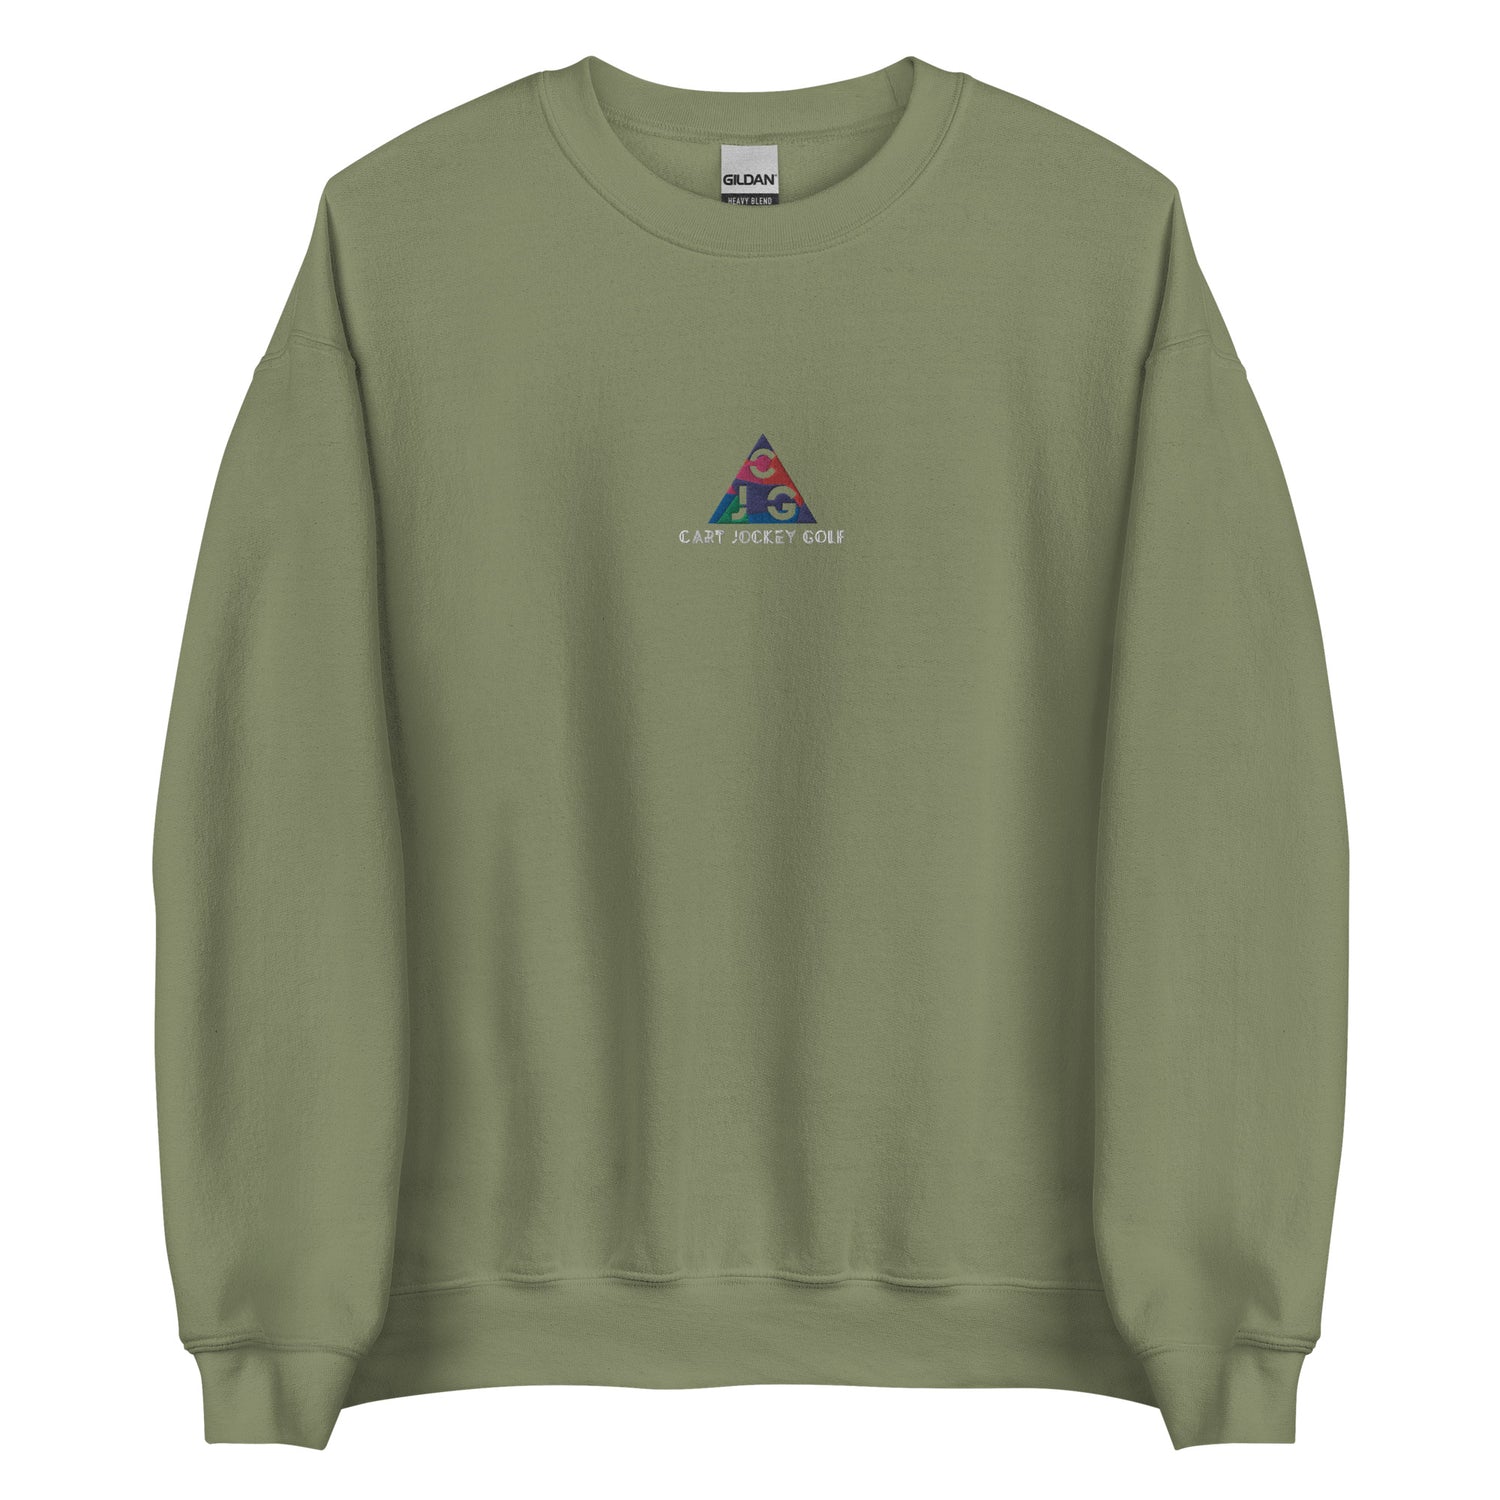 a Triangle Embroidered Crewneck sweatshirt with a Cart Jockey Golf logo on it.